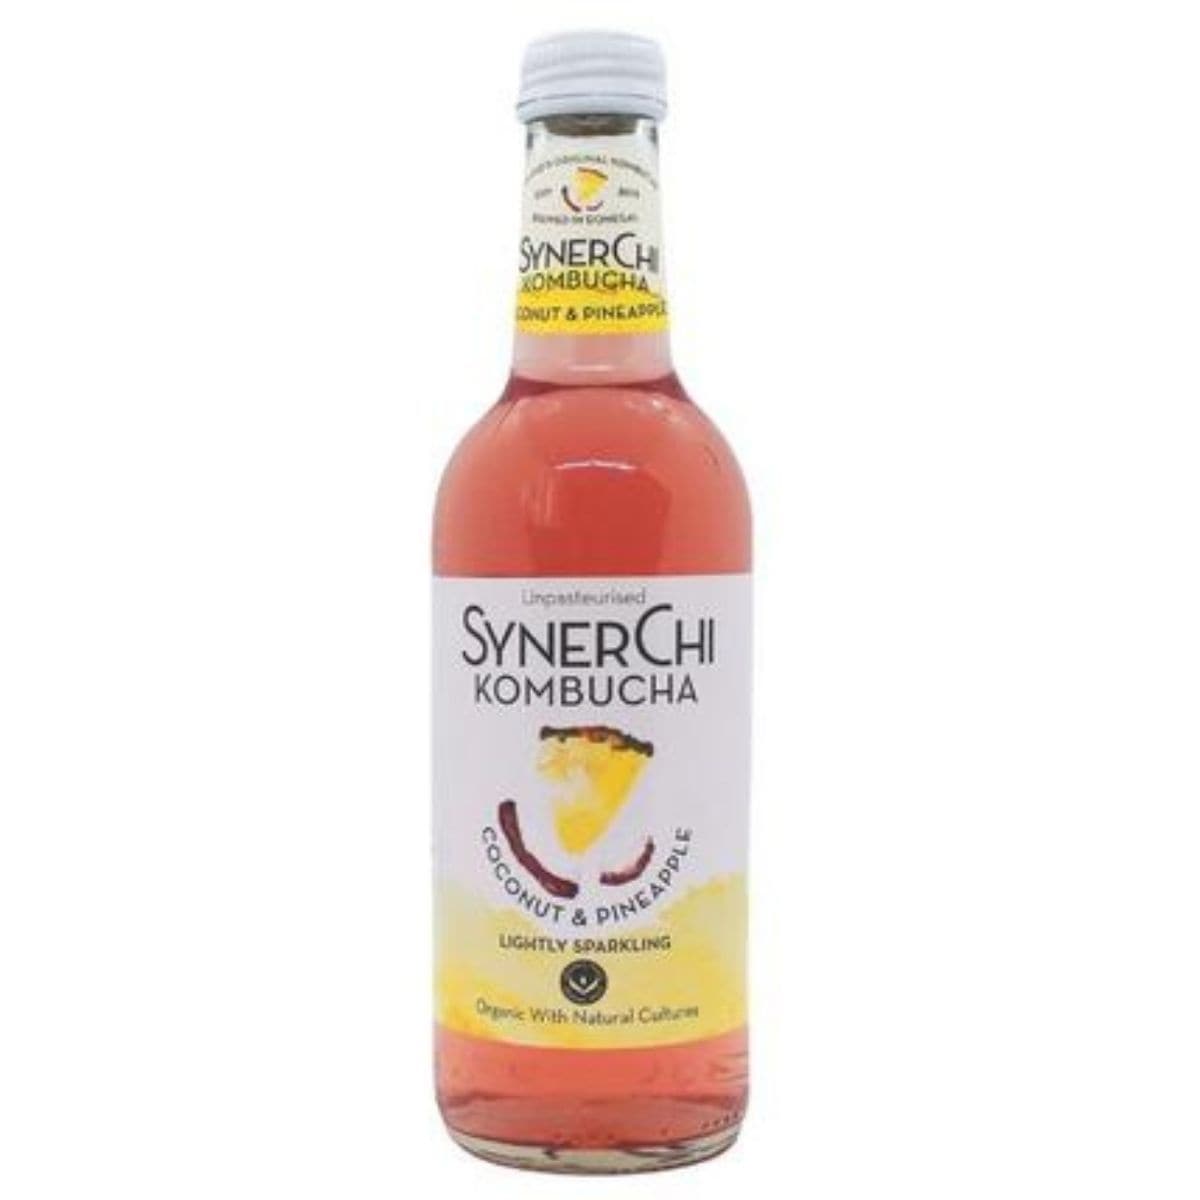 SynerChi Coconut & Pineapple Kombucha 330ml (Organic, Dairy-Free, Gluten-Free)